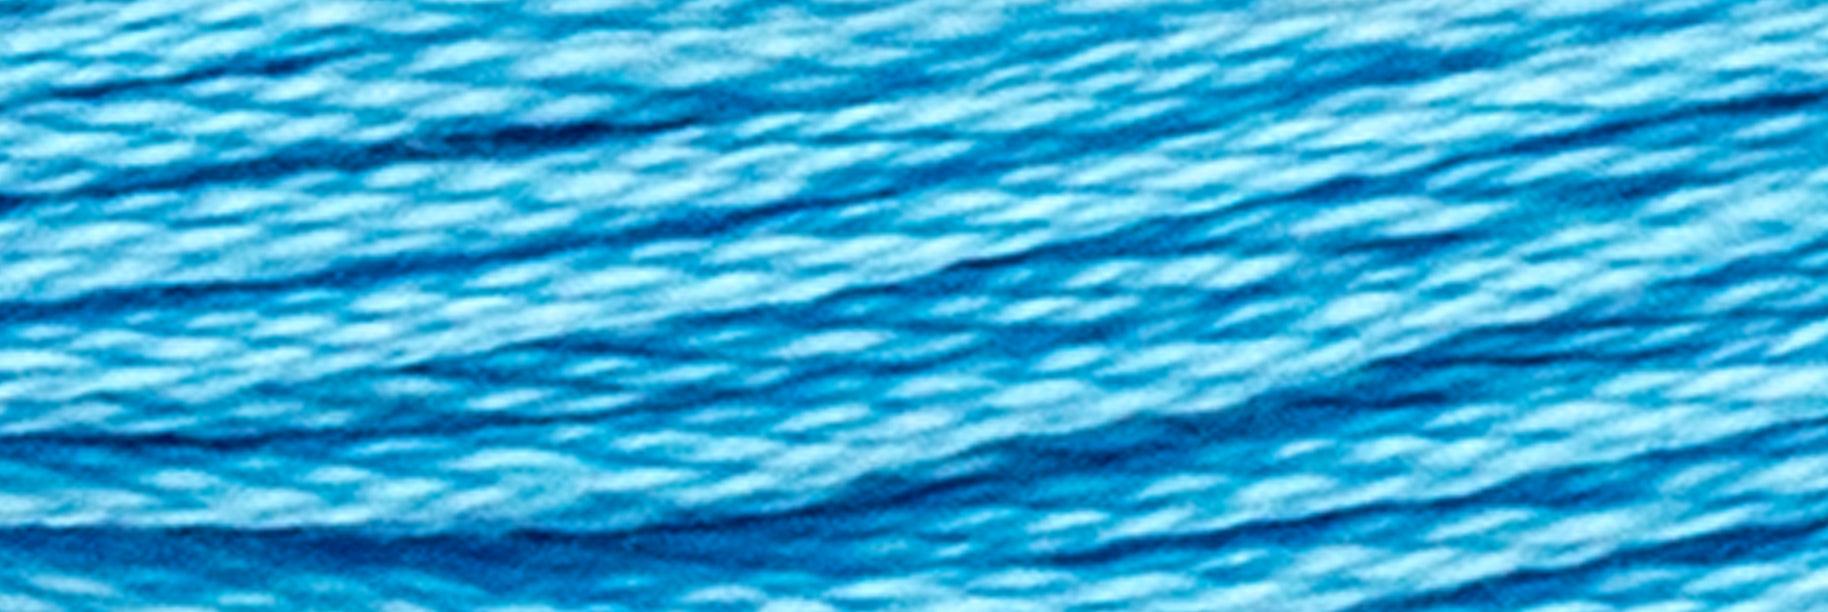 Stranded Cotton Luca-S - 204 / DMC X / Anchor 1090 - Luca-S Stranded Cotton